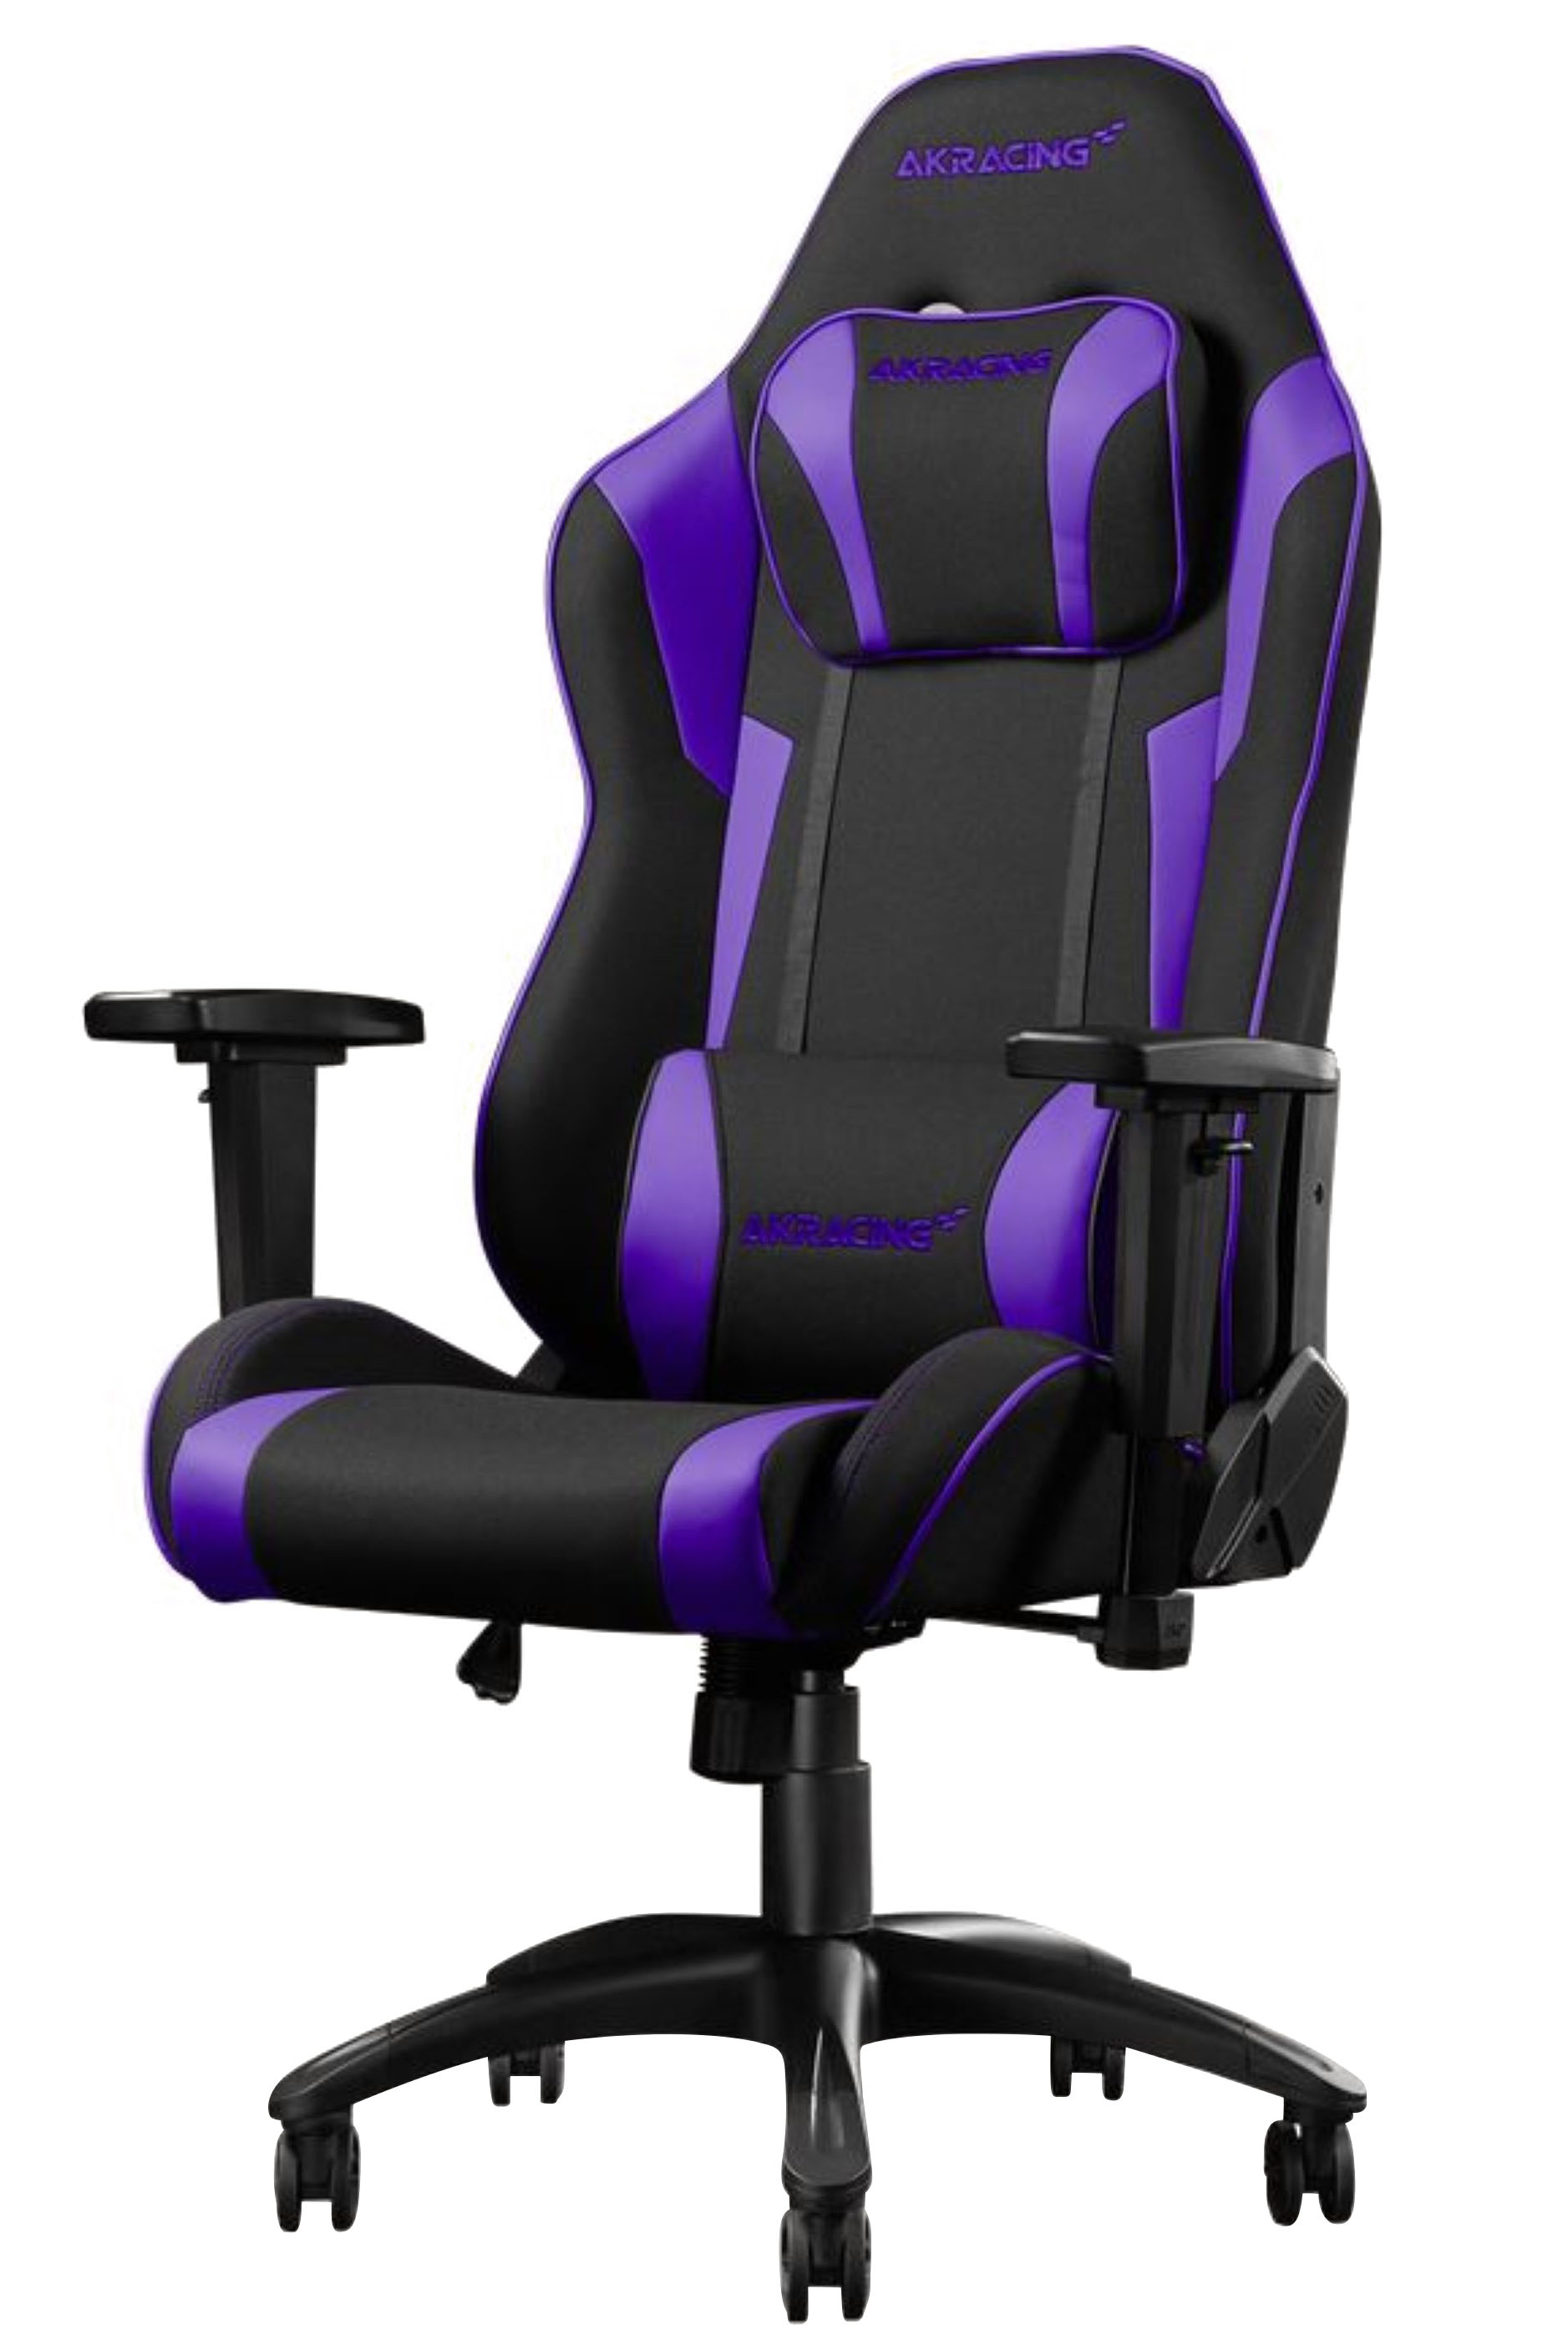 Angle View: AKRacing - Core Series EX SE Fabric Gaming Chair - Indigo